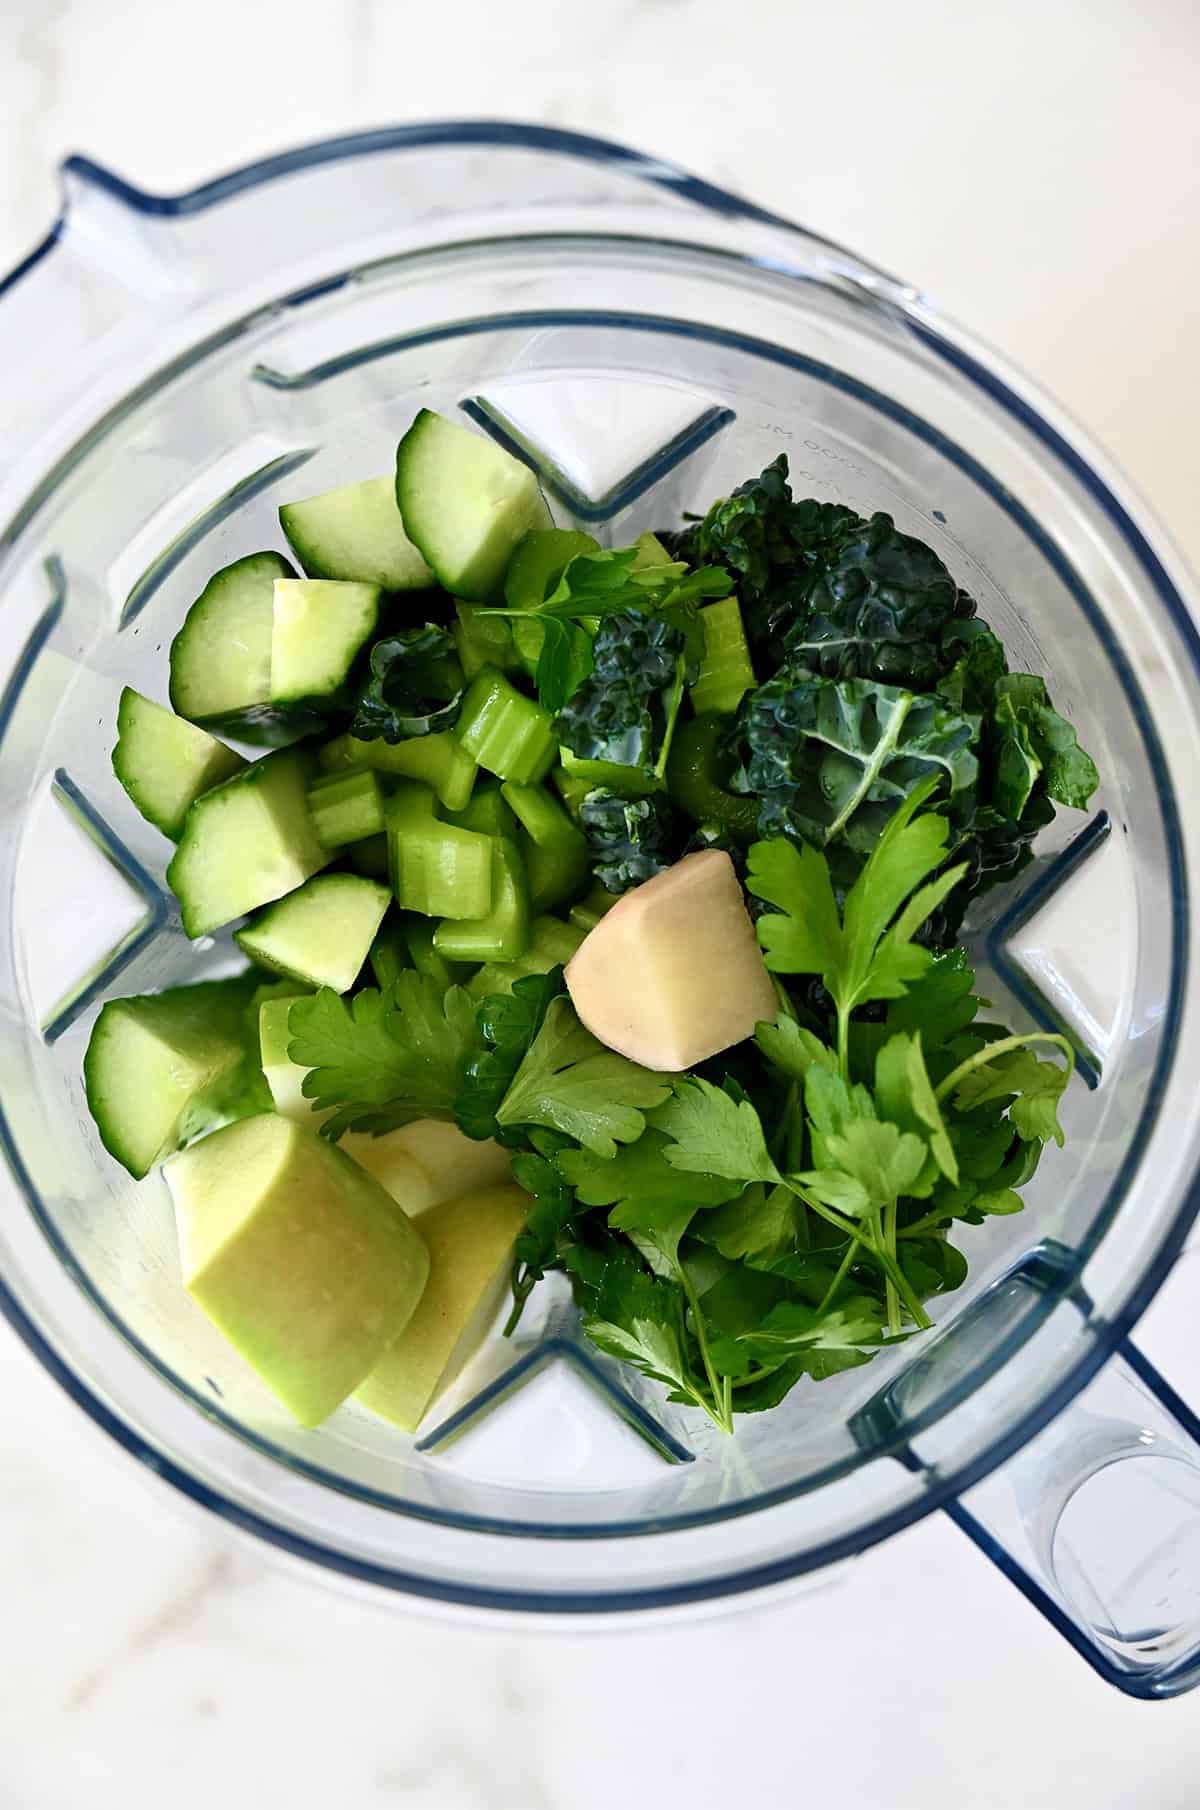 A blender jar is filled with ingredients for green juice, including cucumber, celery, ginger, apple and kale.